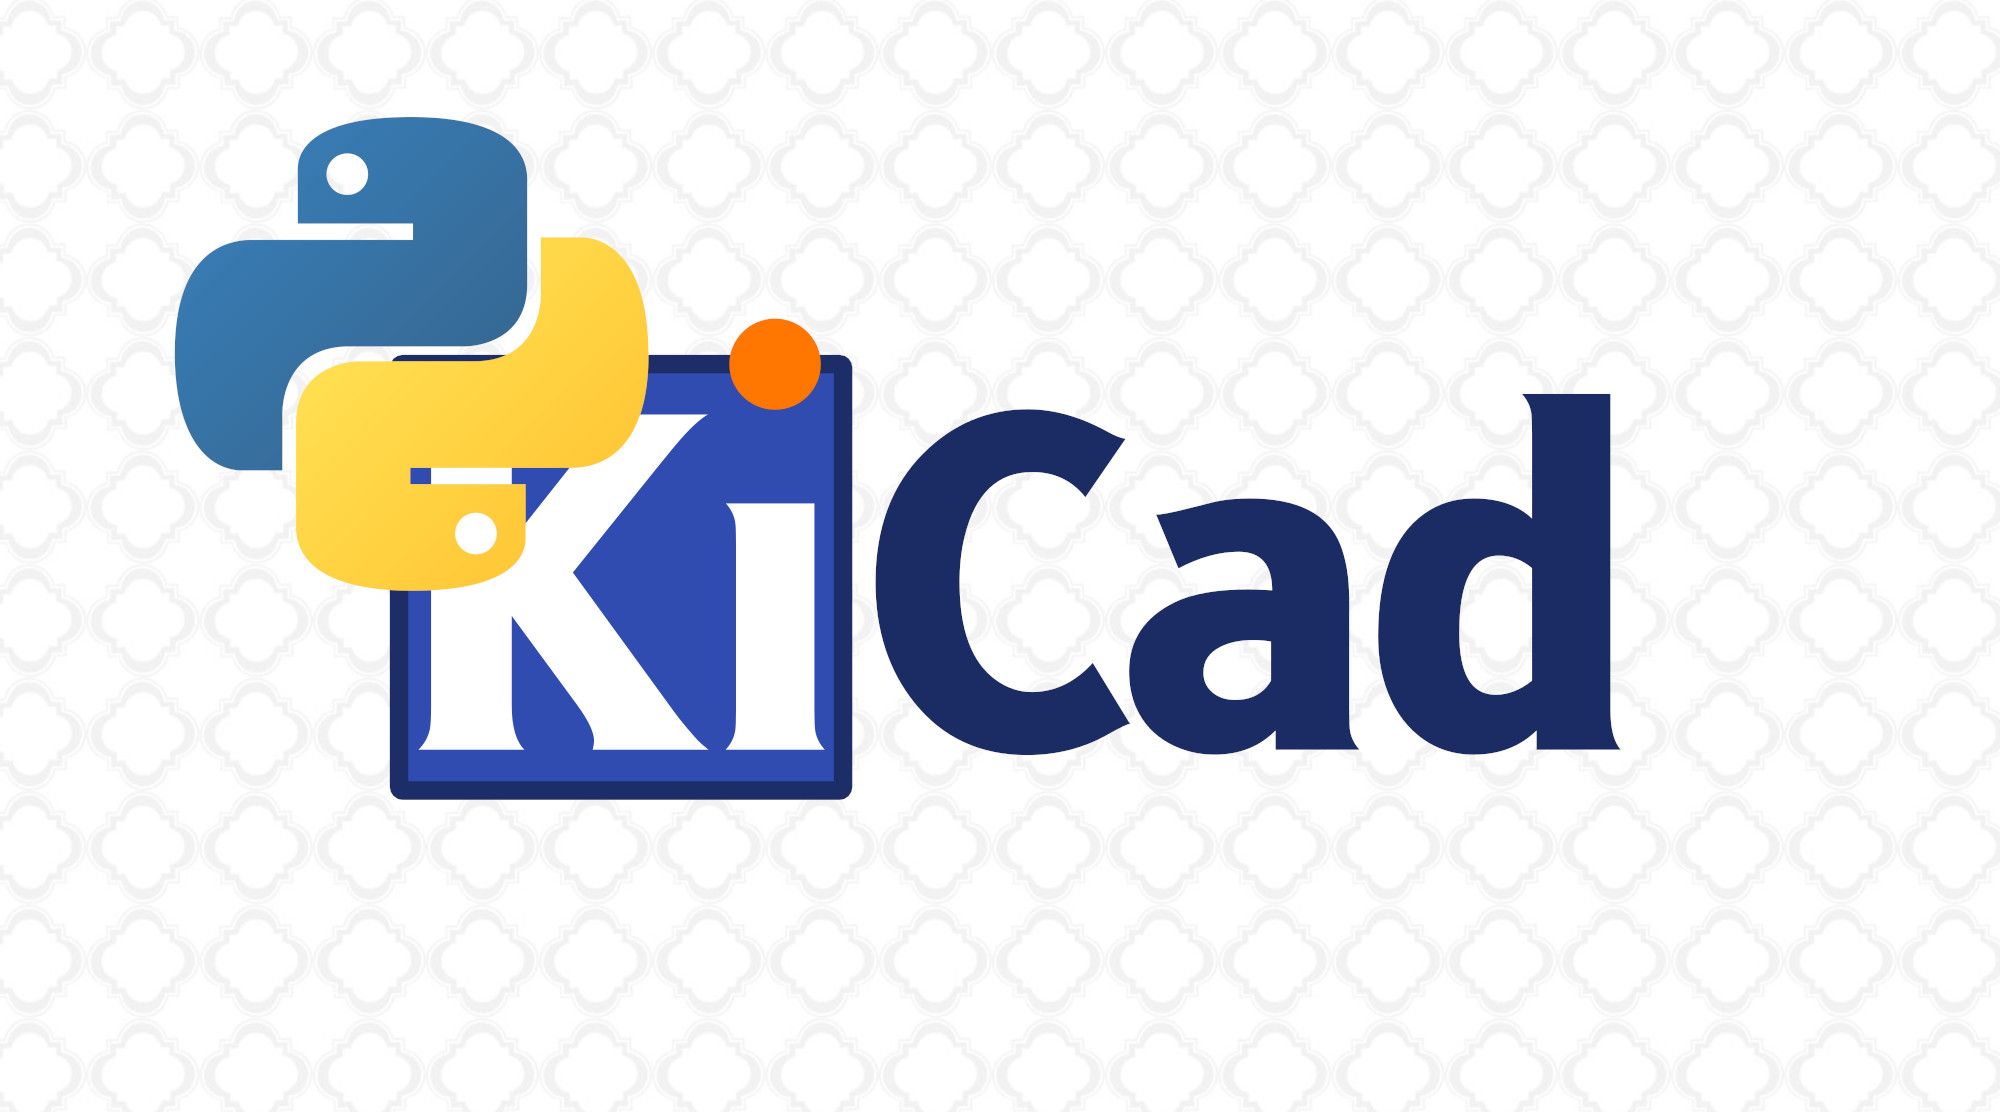 Rendering SVG with KiCad scripting API